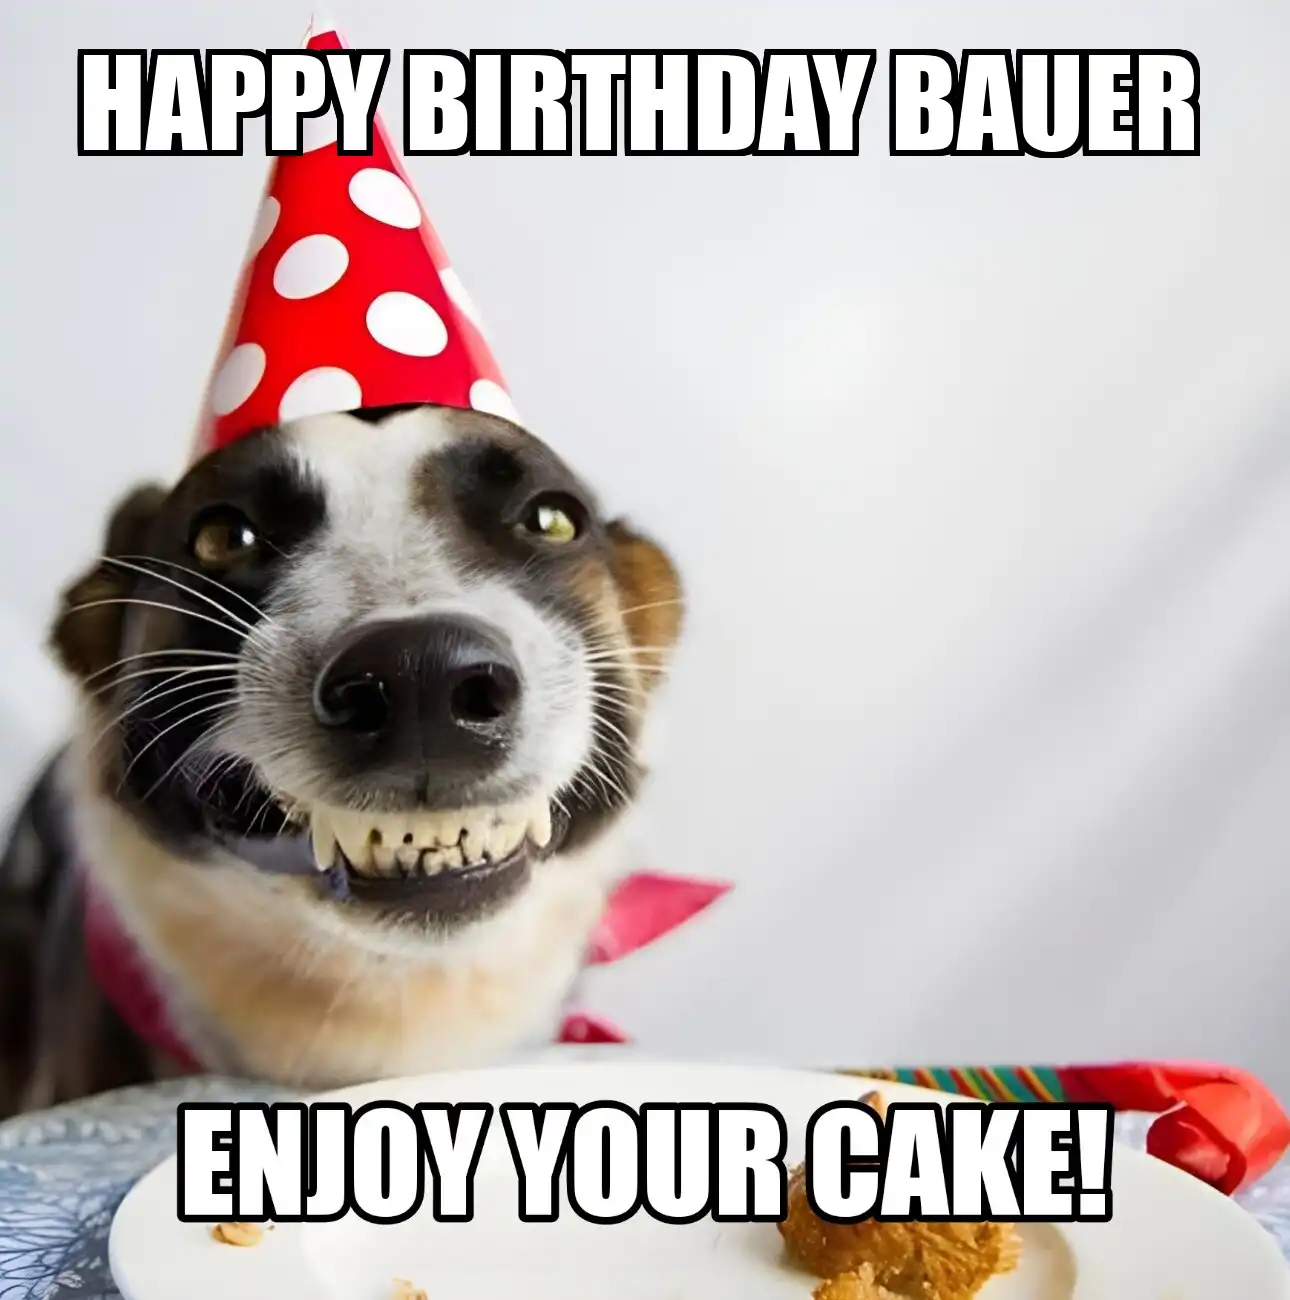 Happy Birthday Bauer Enjoy Your Cake Dog Meme